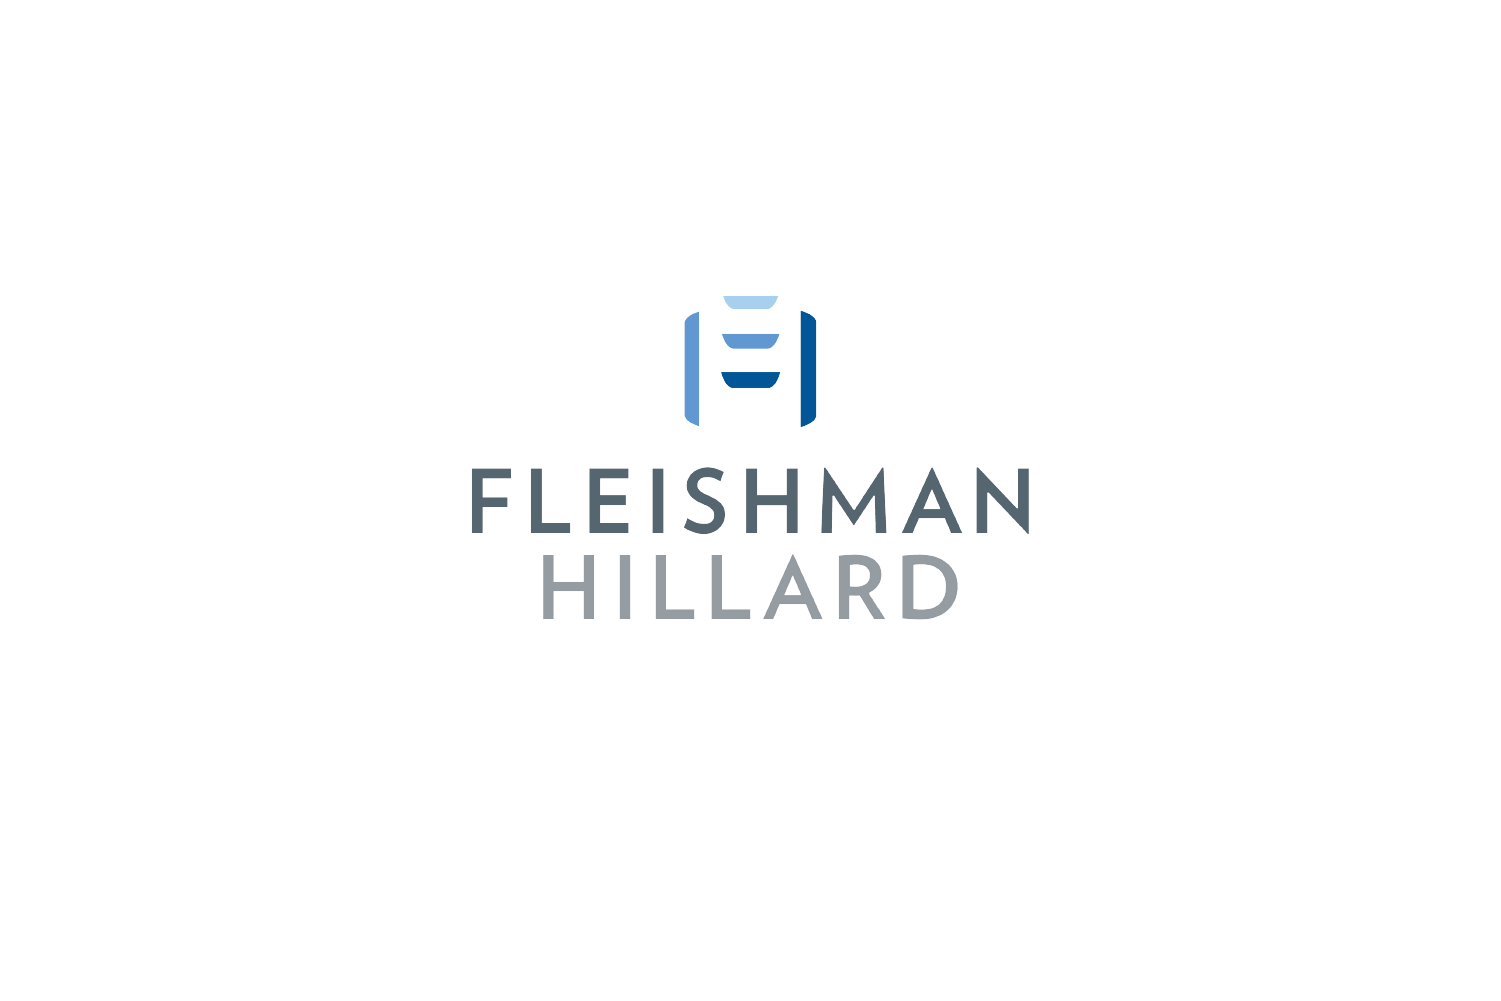 Fleishman Hillard Logo